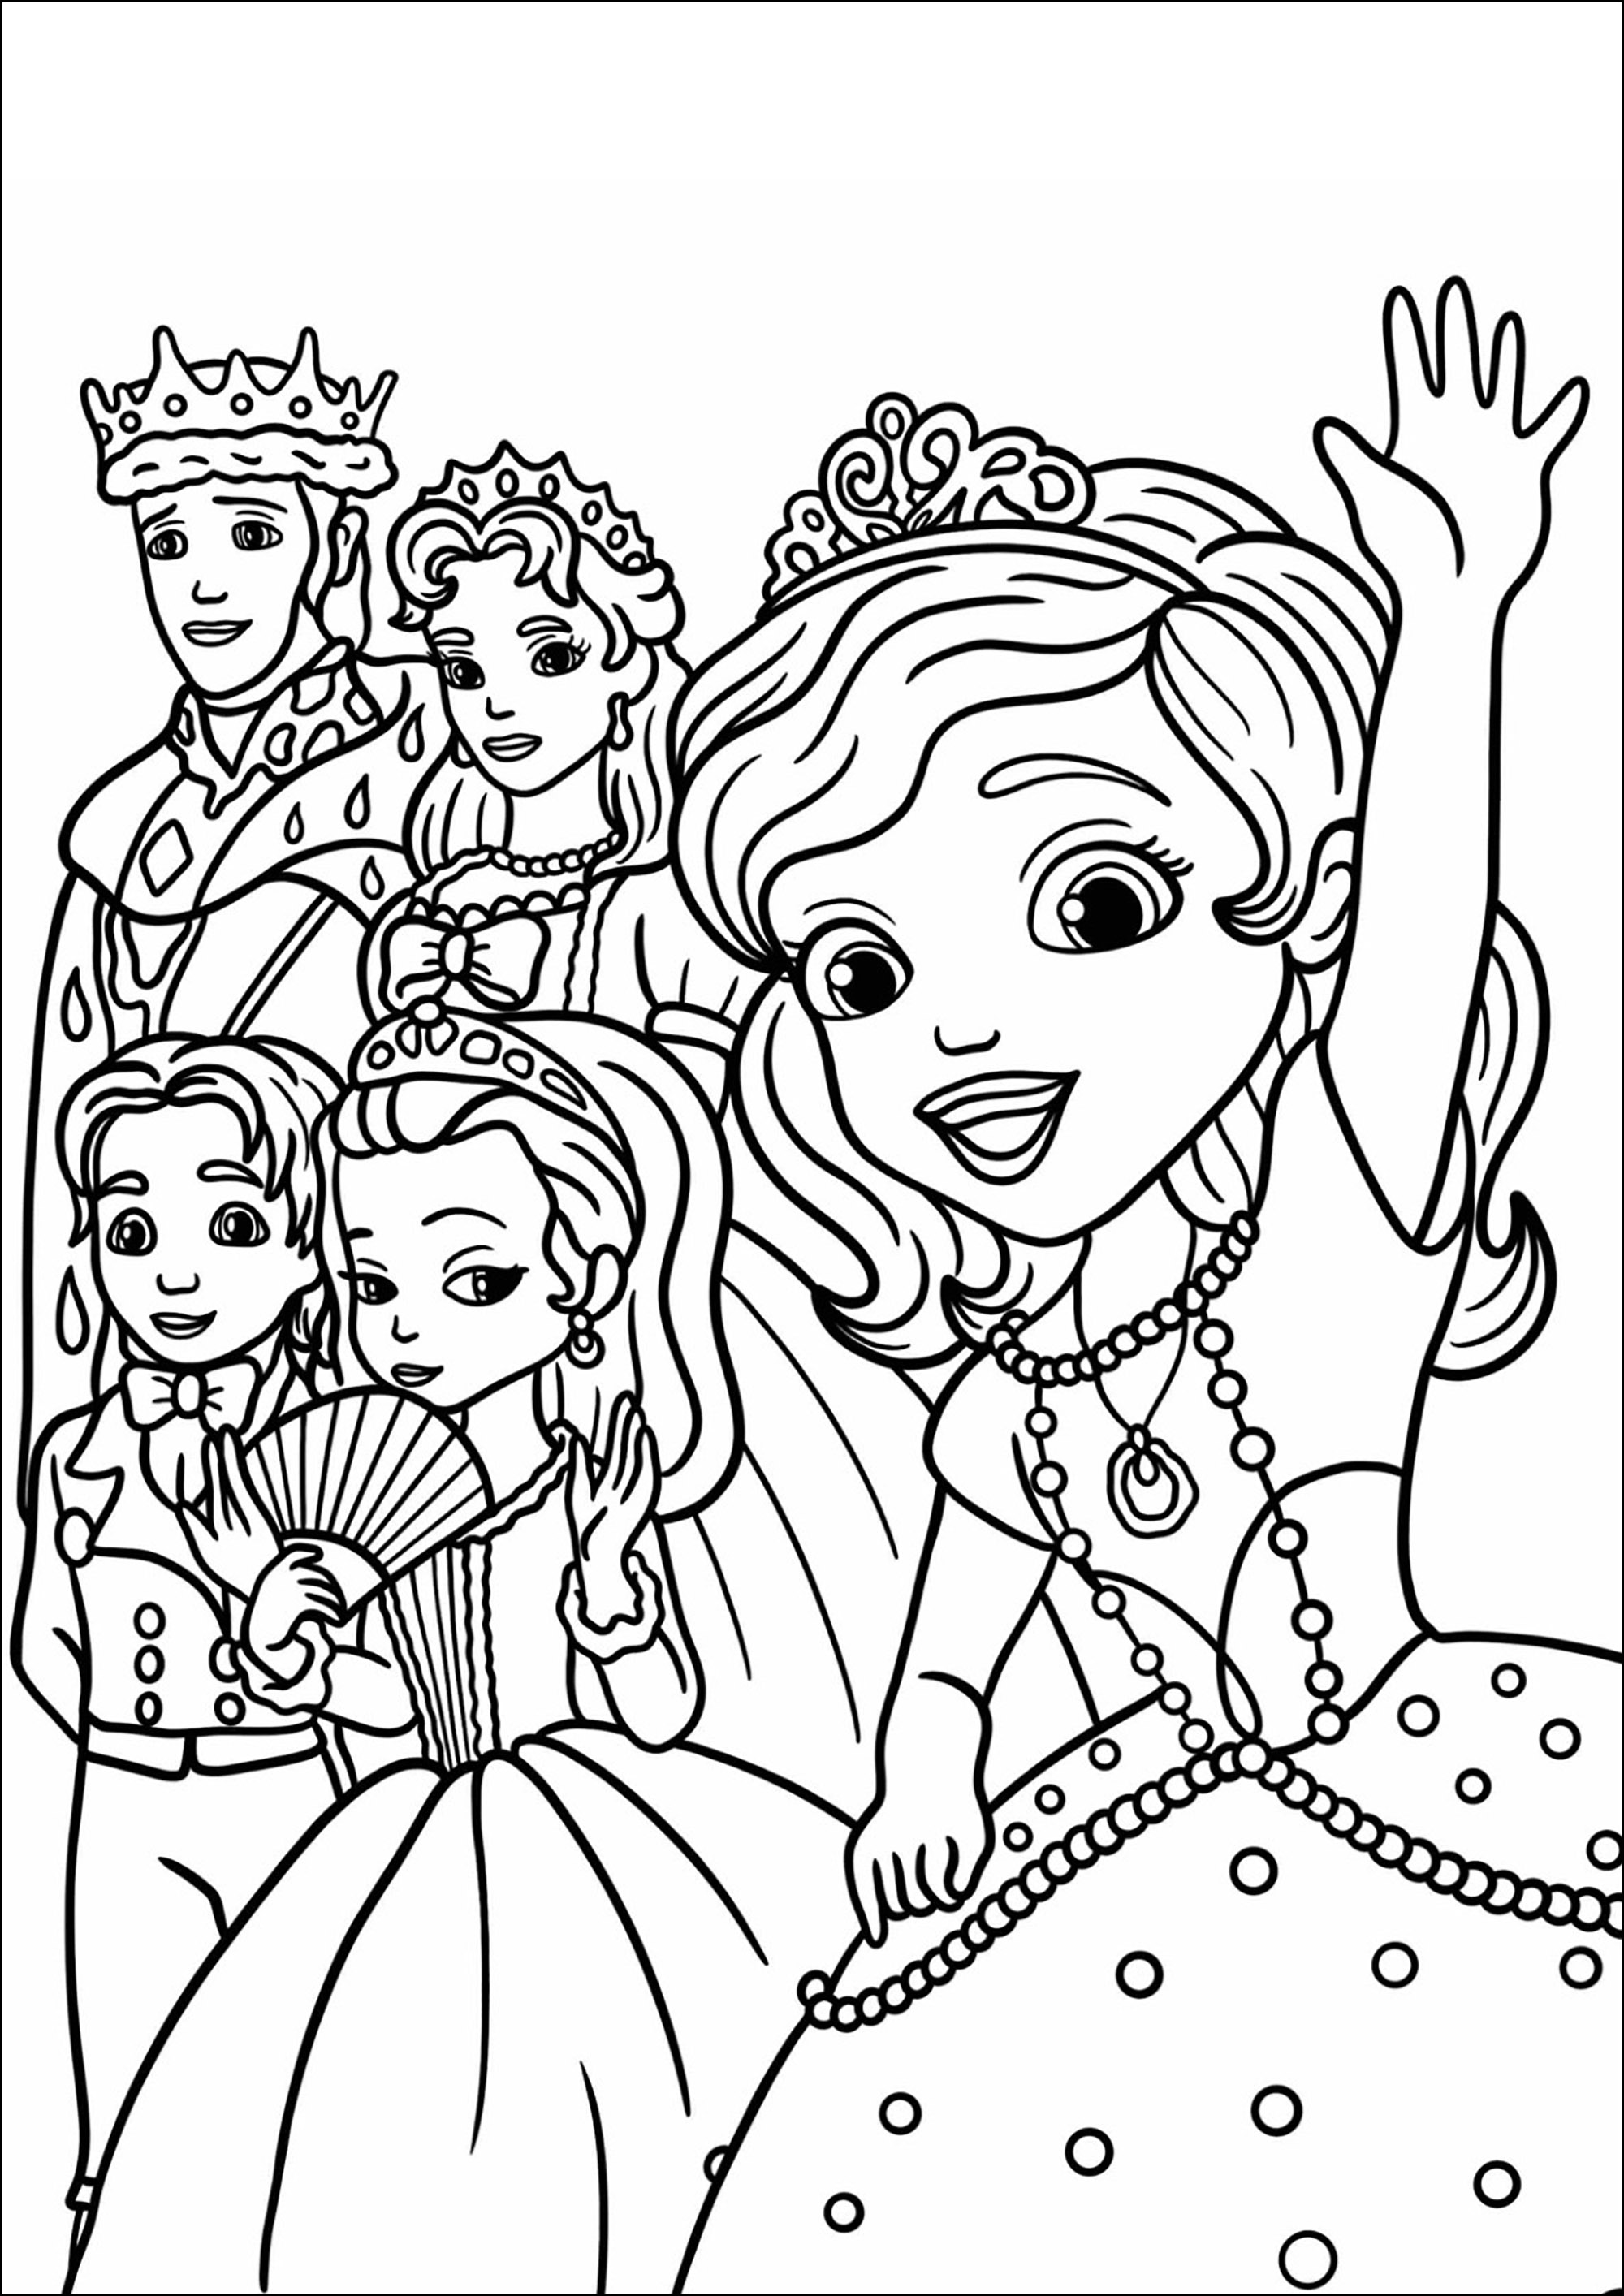 Princesse Sofia et sa famille royale